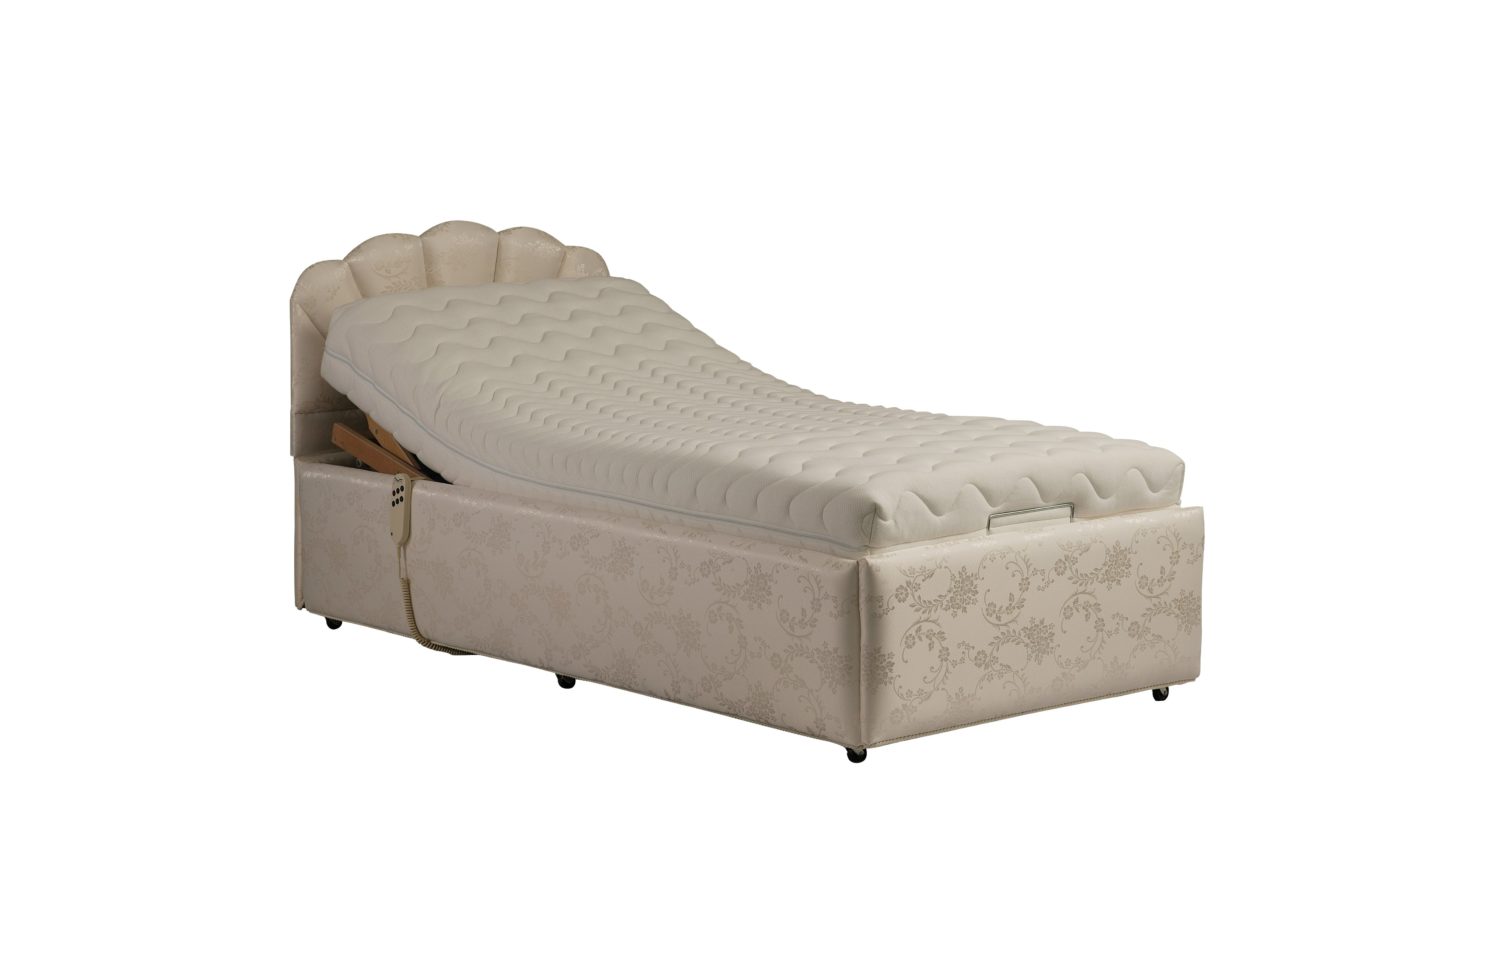 The Windsor Single Adjustable Bed